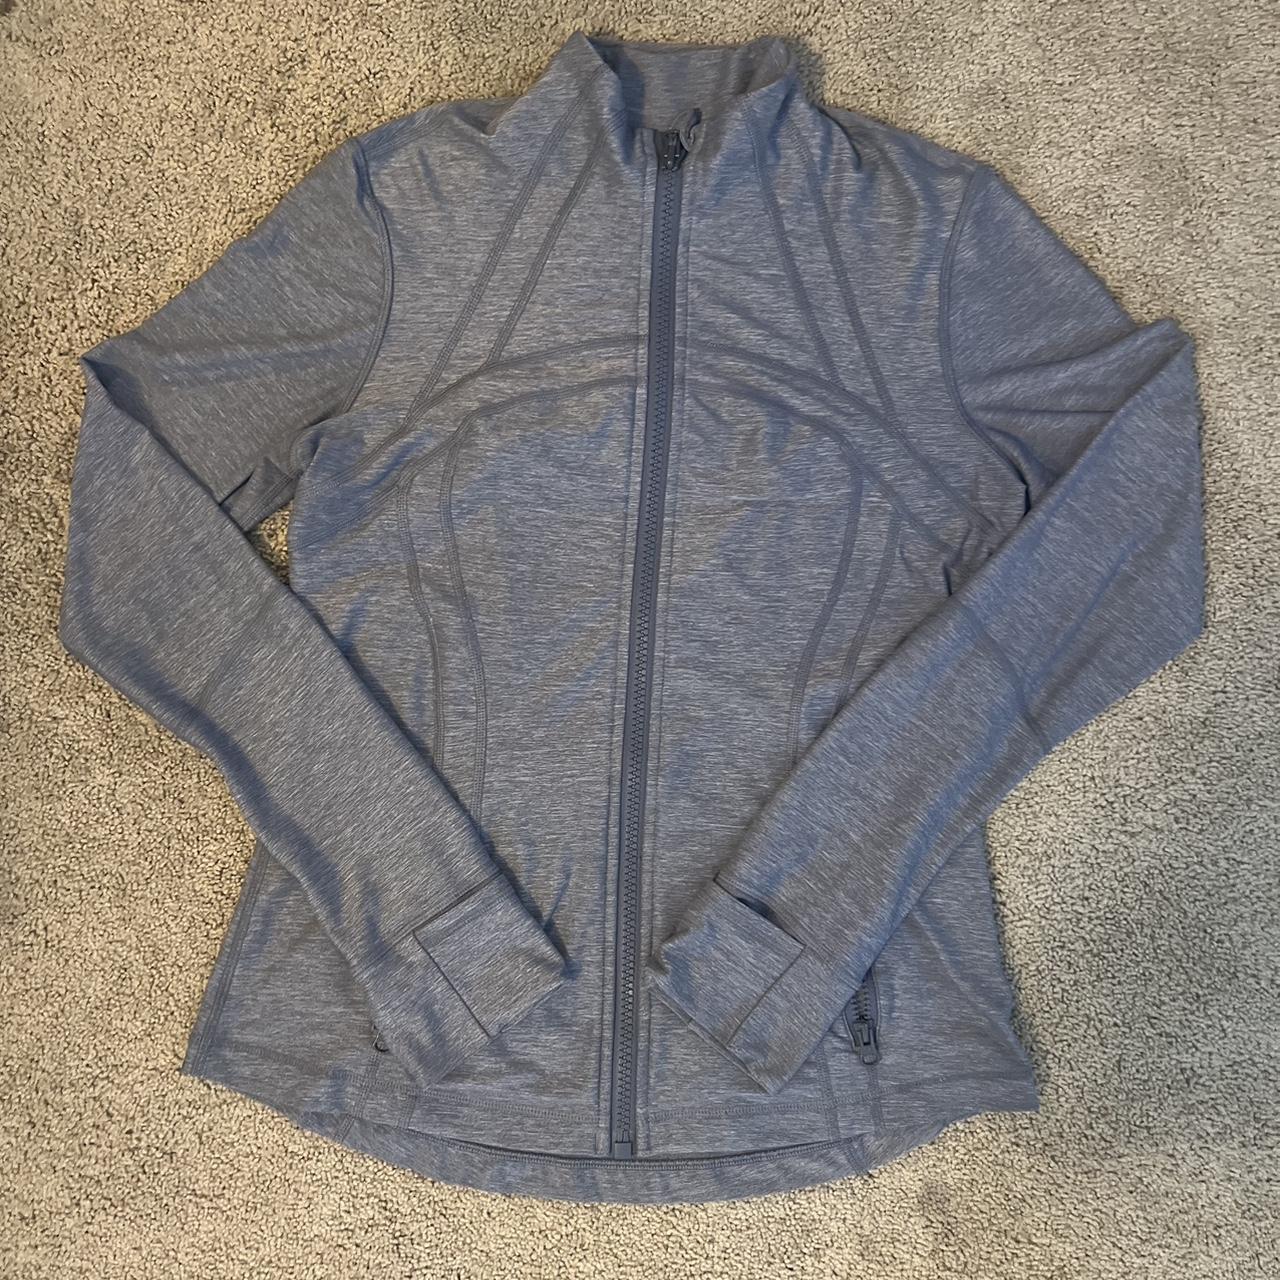 Lululemon jacket size 10. Excellent condition, no - Depop